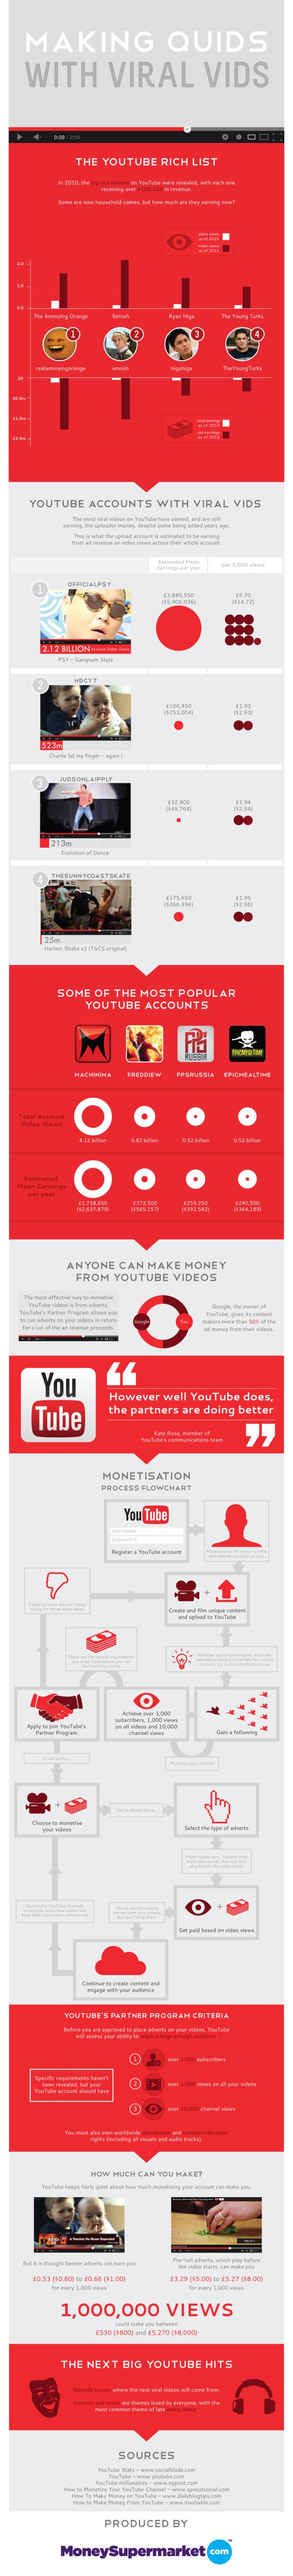 Making Money on YouTube [Infographic]